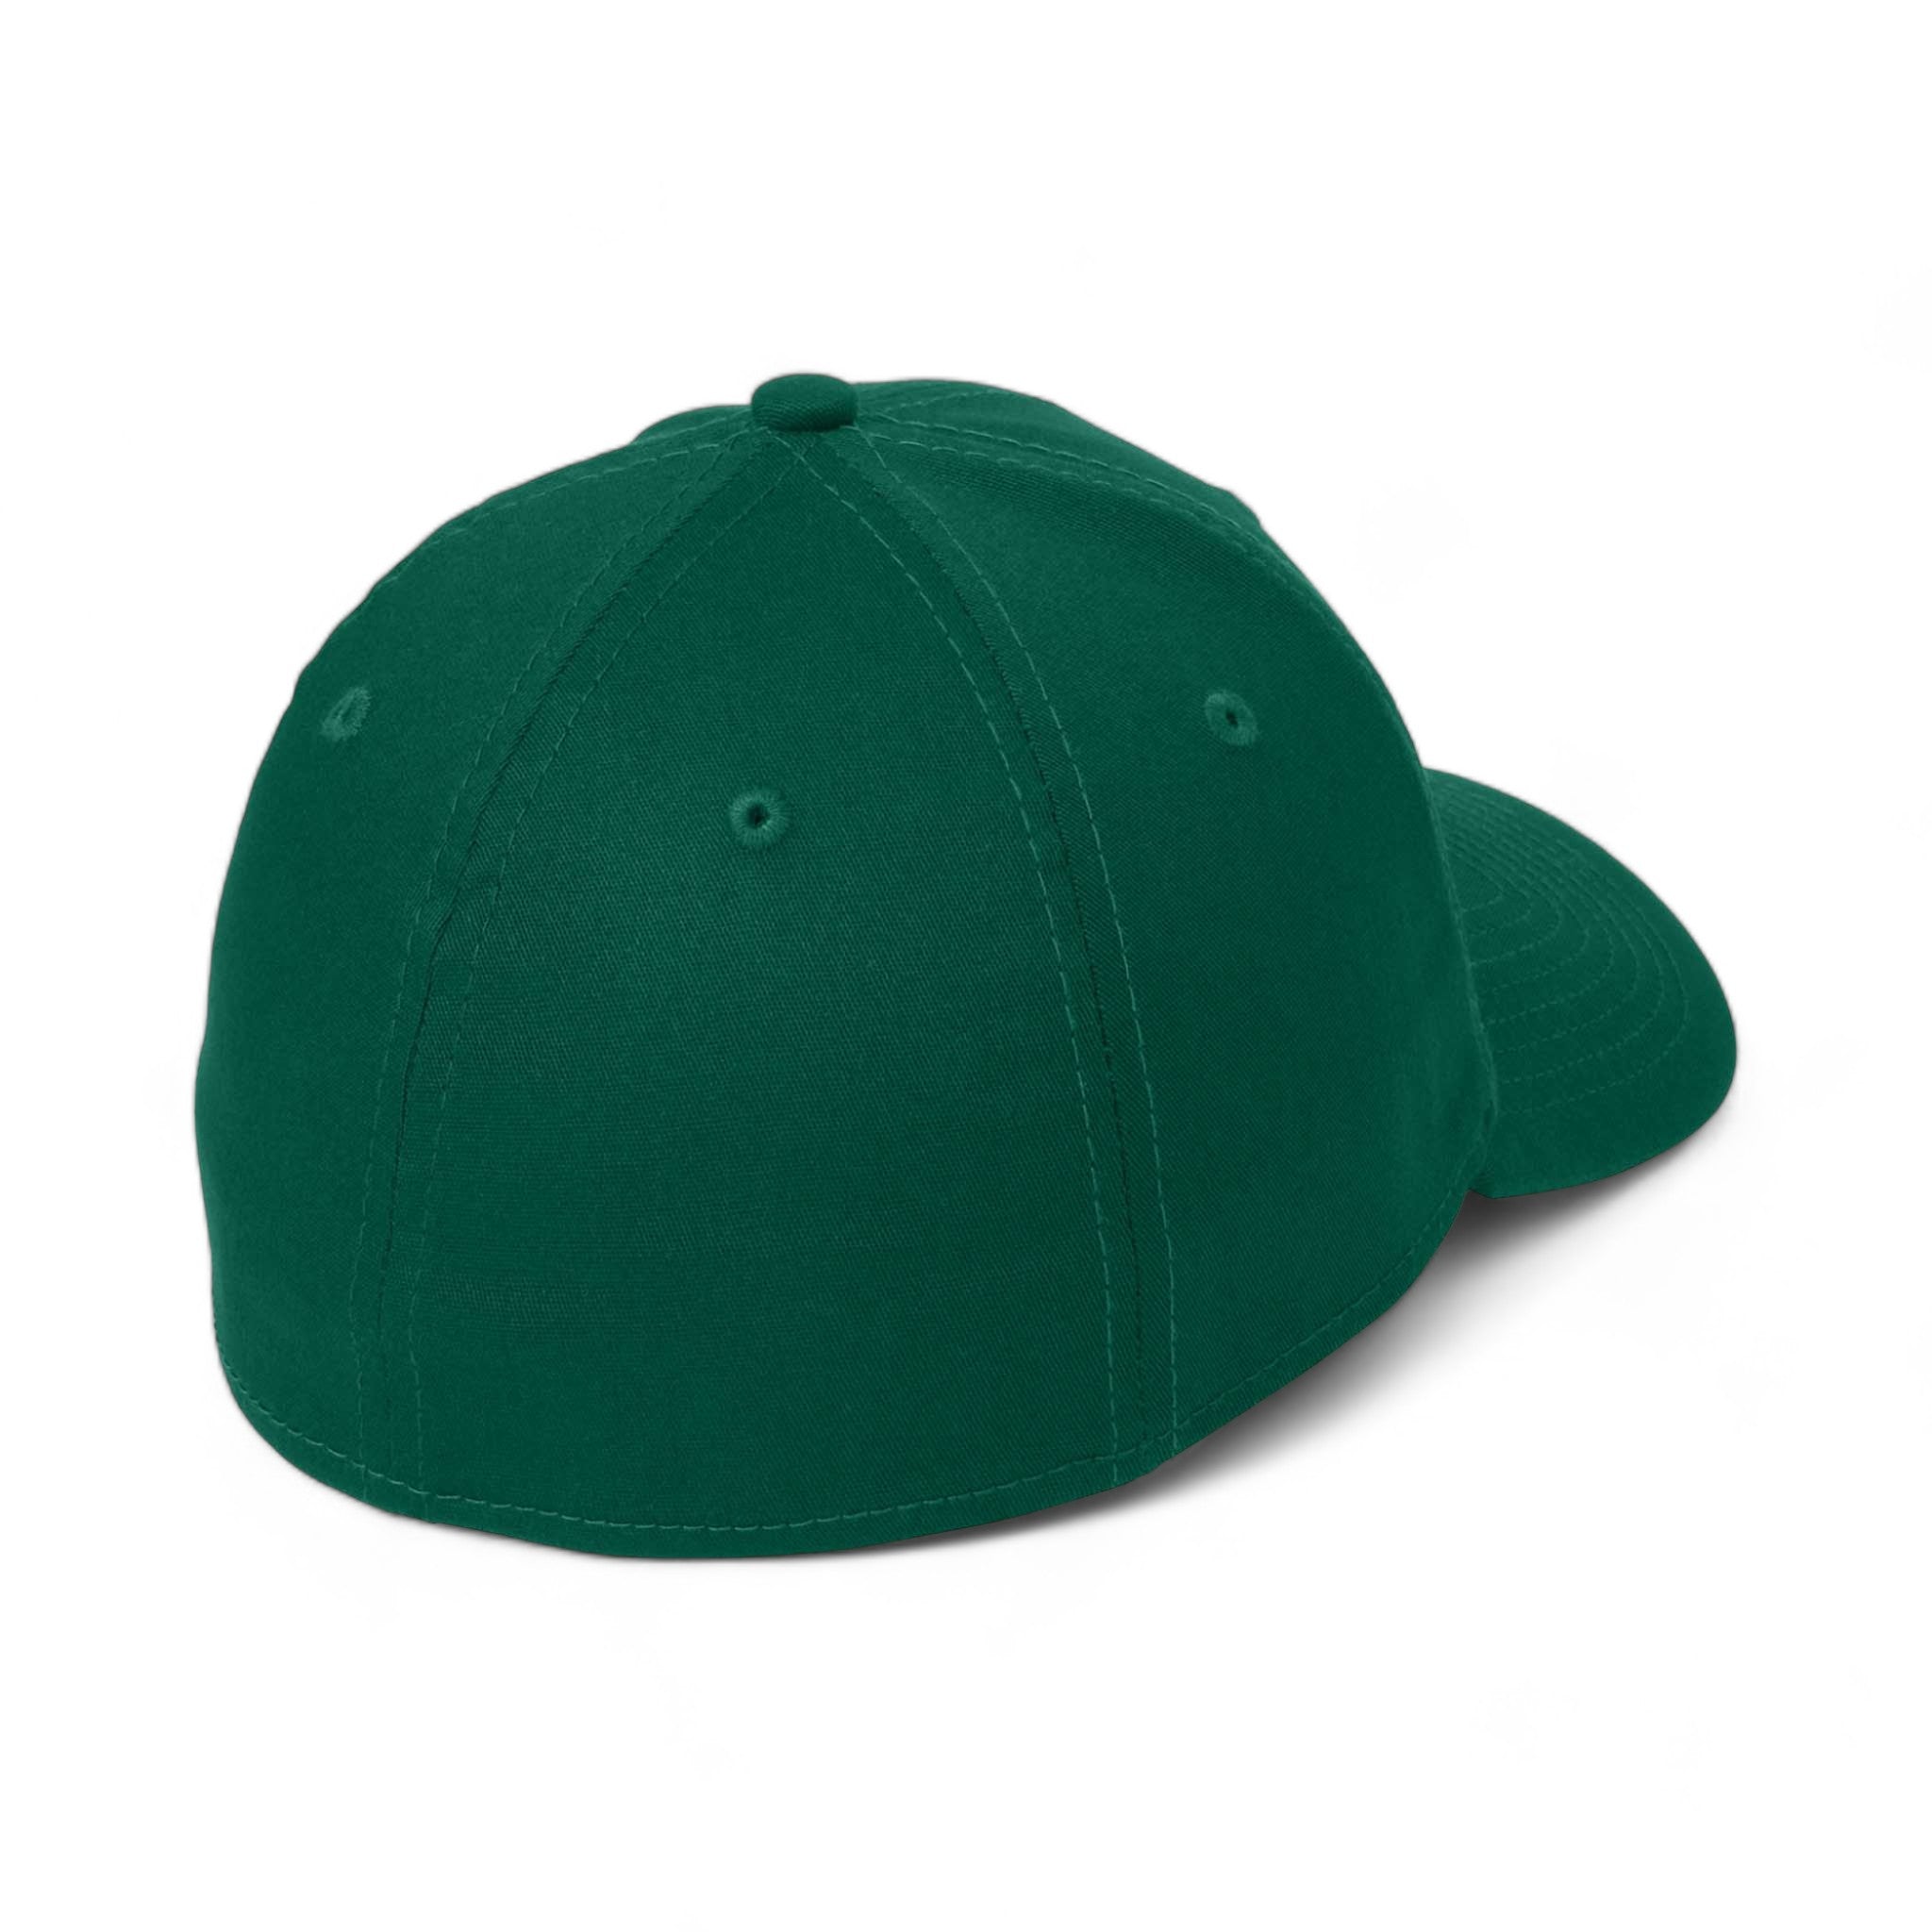 Back view of New Era NE1000 custom hat in dark green